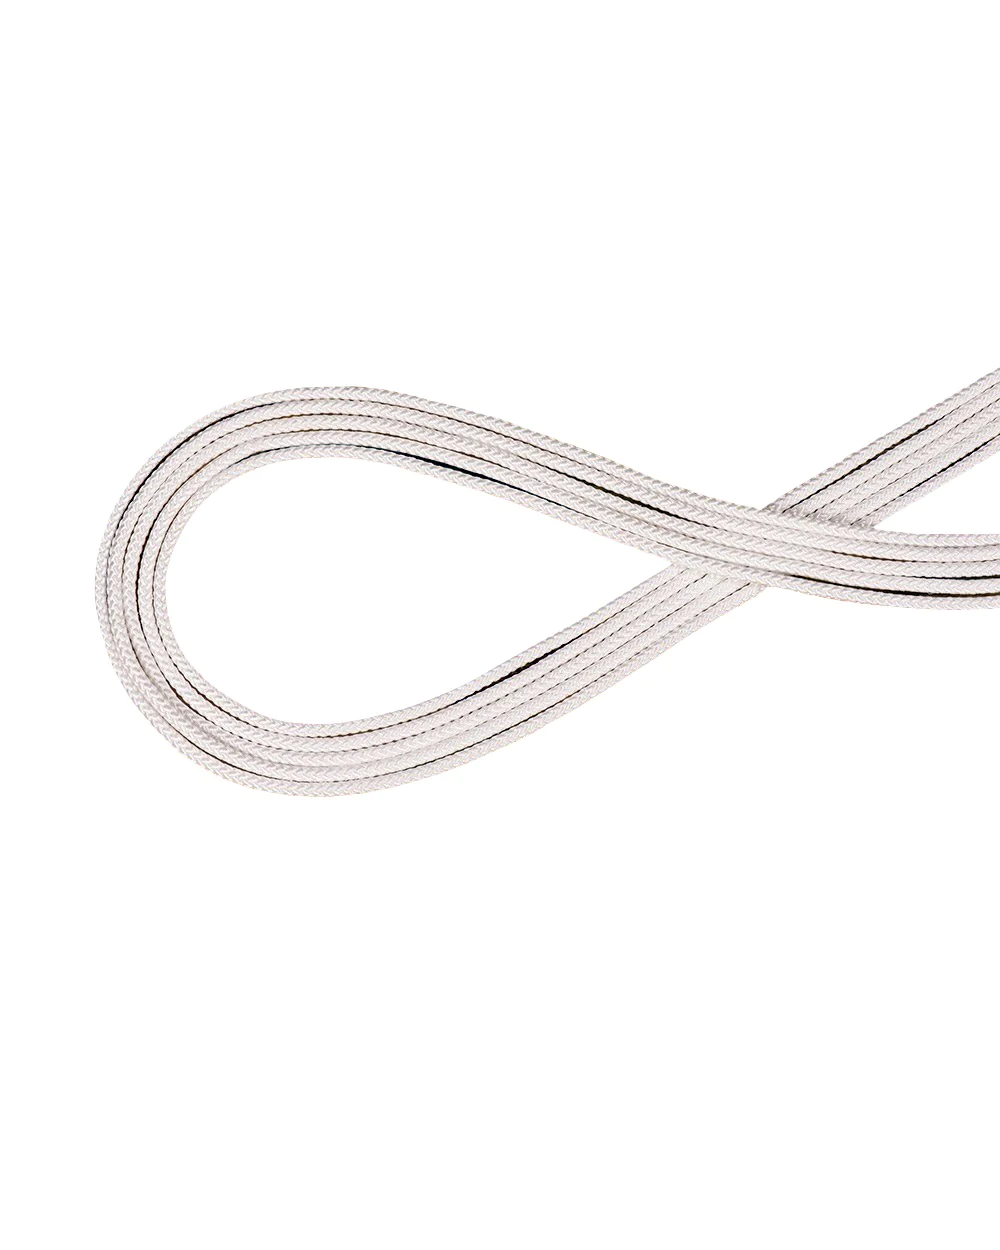 Rope White Spectra 5/32" (4mm) Downhaul Line 1ft Precut